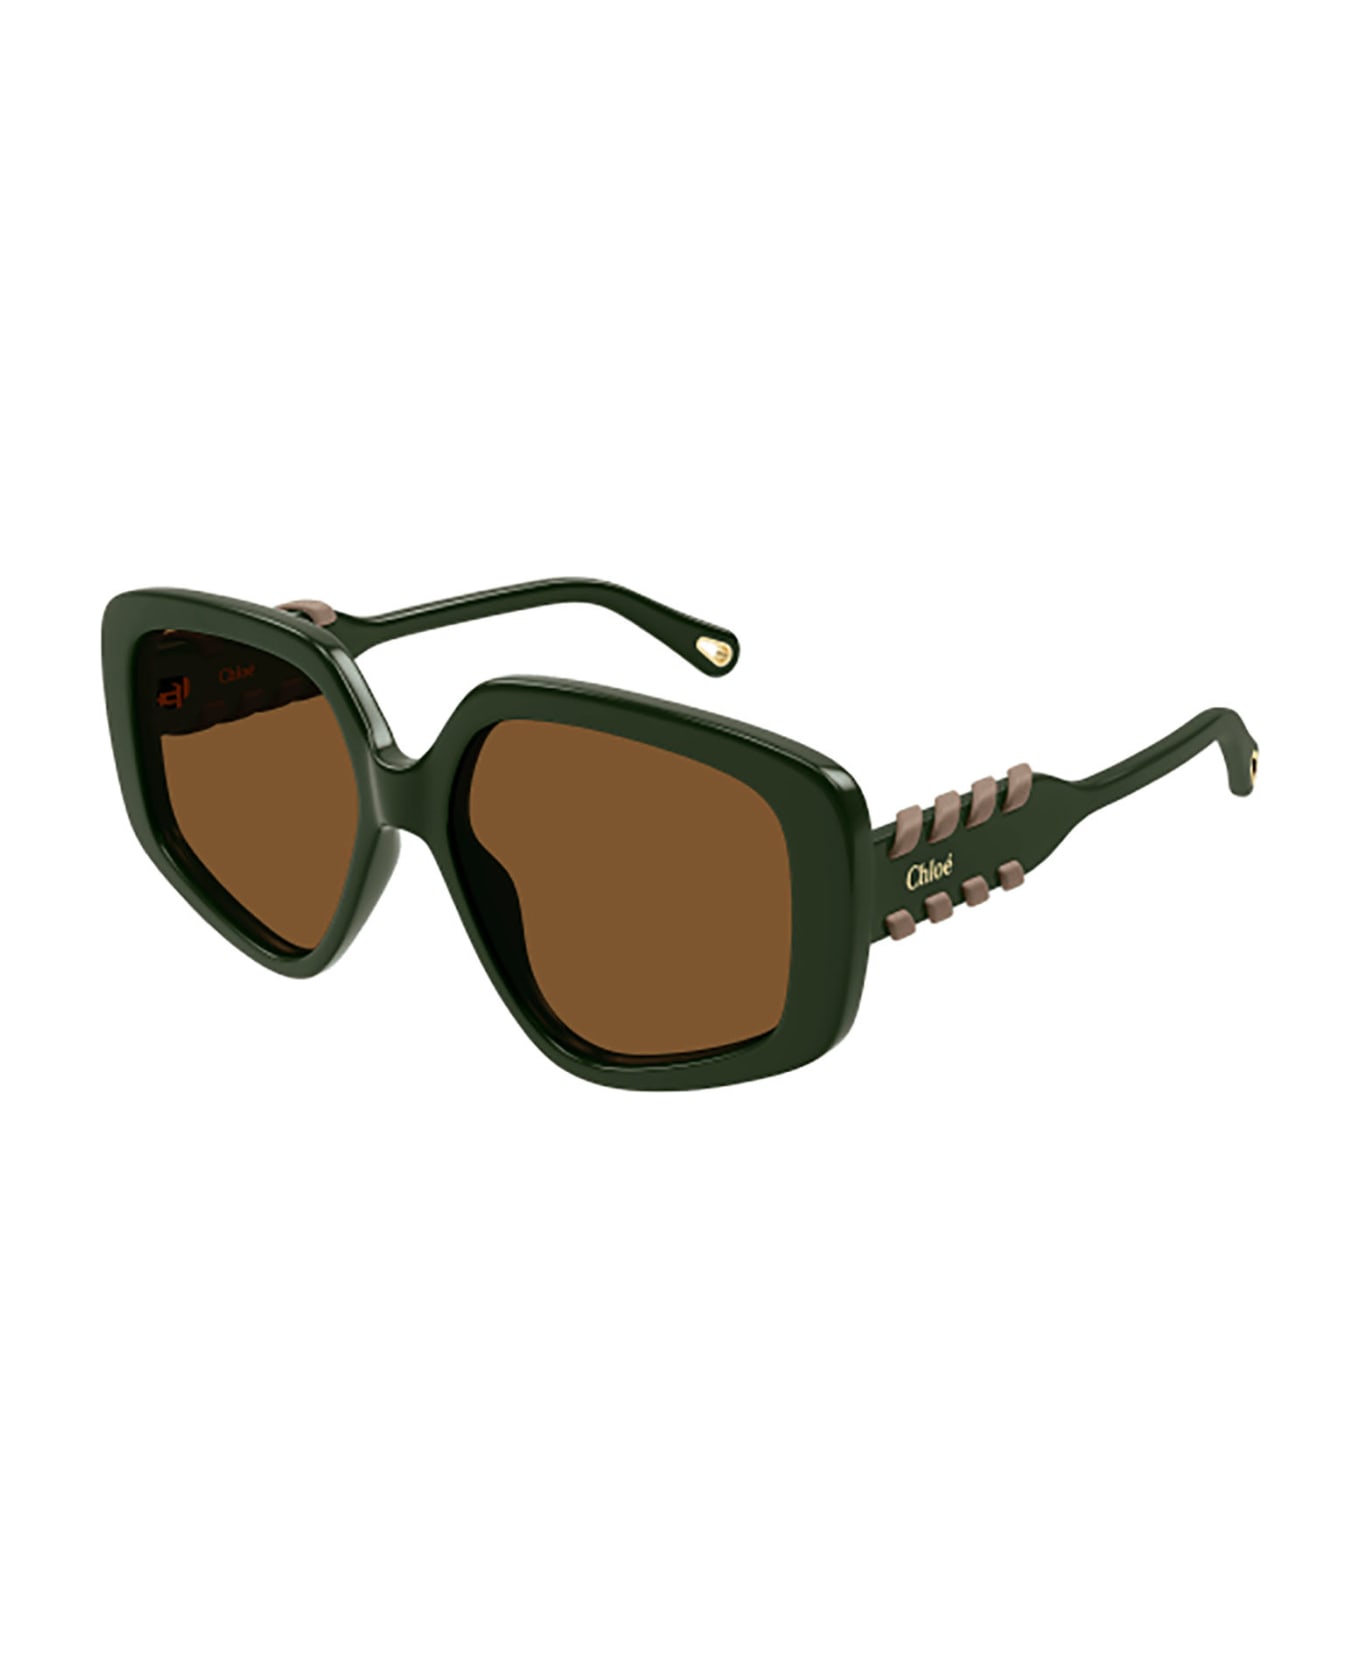 Chloé Eyewear CH0210S Sunglasses - Green Green Brown サングラス